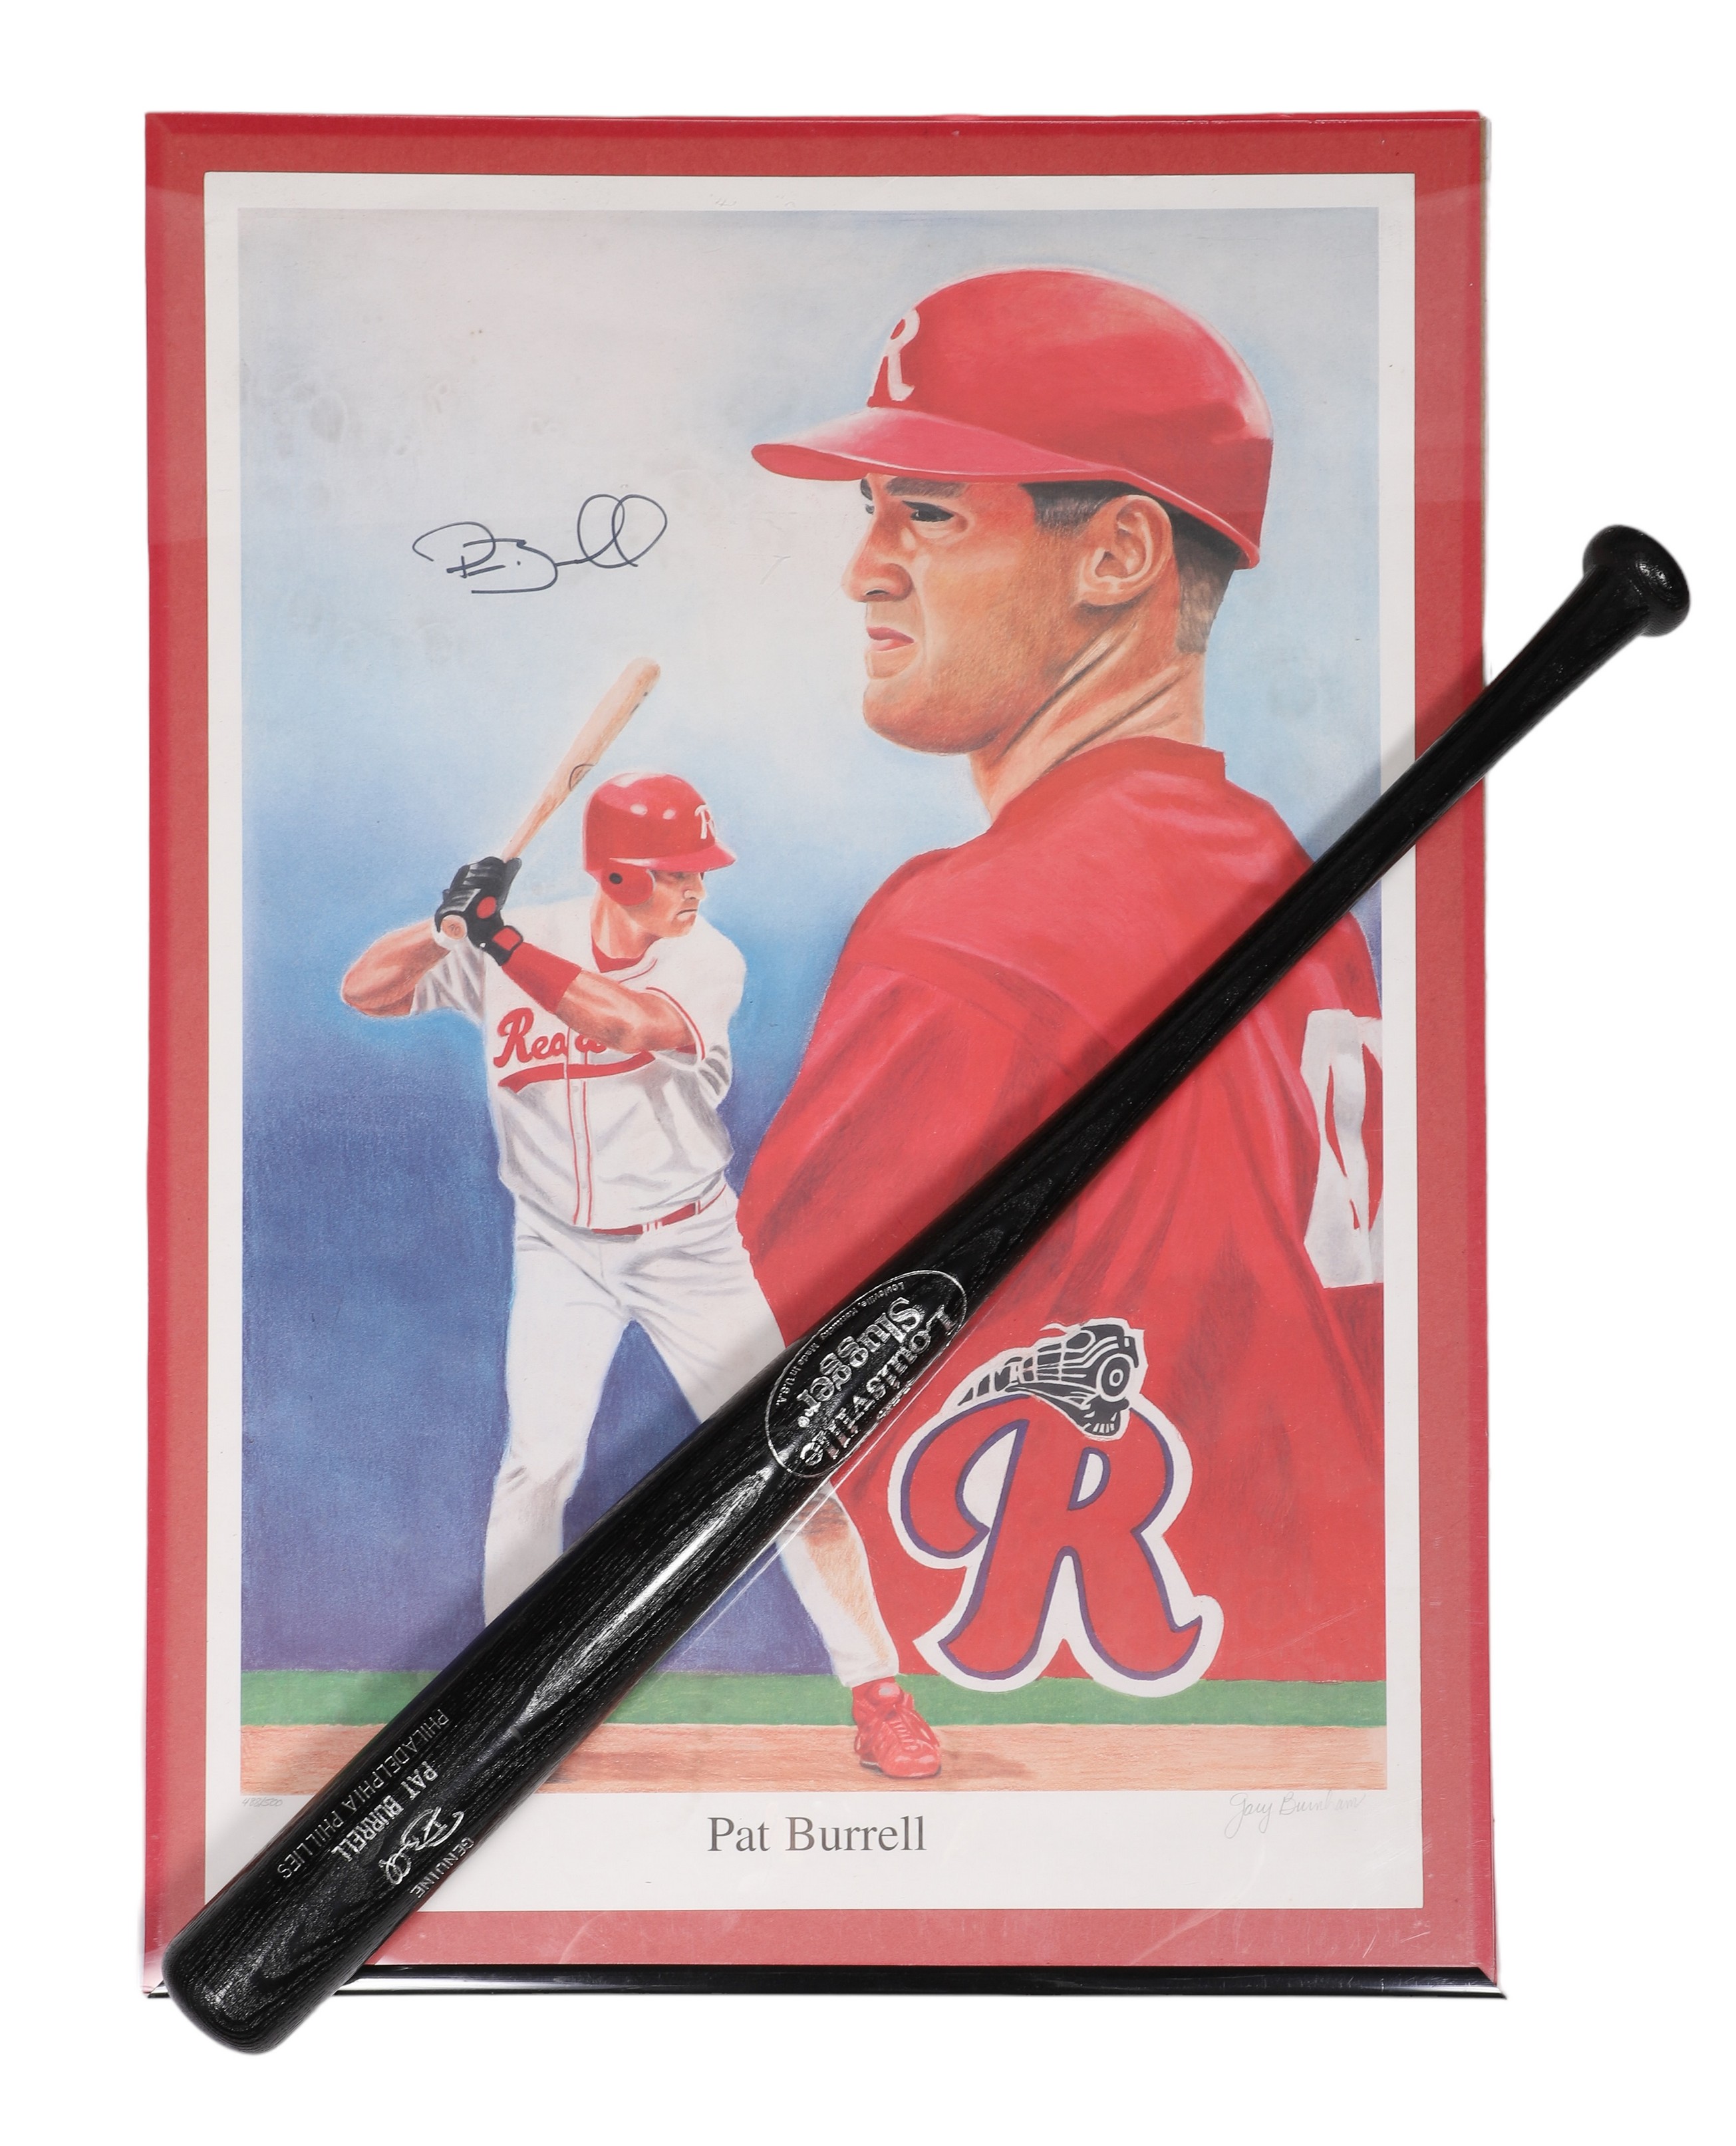 Pat Burrell baseball poster & bat,